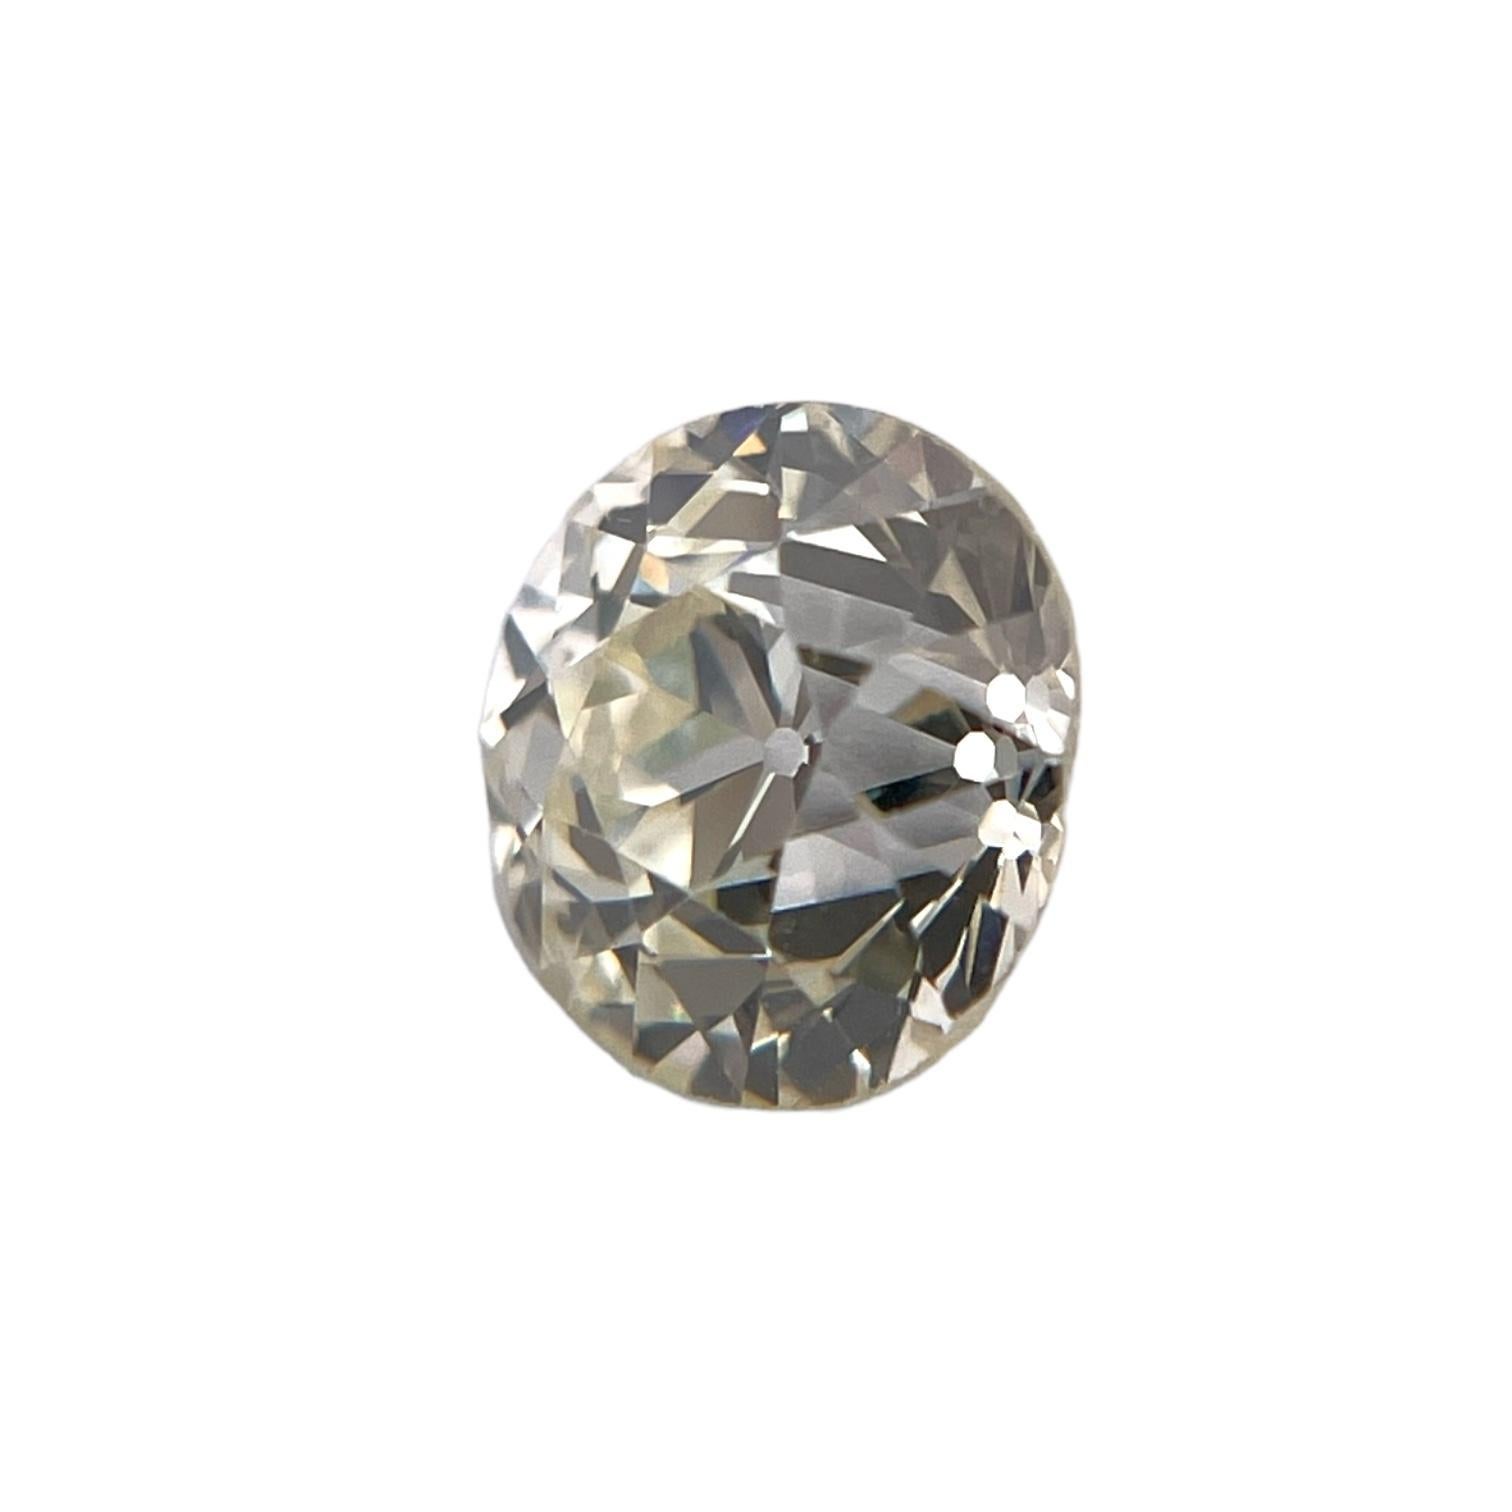 ITEM DESCRIPTION

ID #: NYC57911
Stone Shape: Old European
Diamond Weight: 1.29Carat
Fancy Color: M
Cut:	Brilliant
Measurements: 6.58 x 6.88 x 4.56 mm
Symmetry: Fair
Polish: Good
Fluorescence: None
Certifying Lab: GIA
GIA Certificate #: